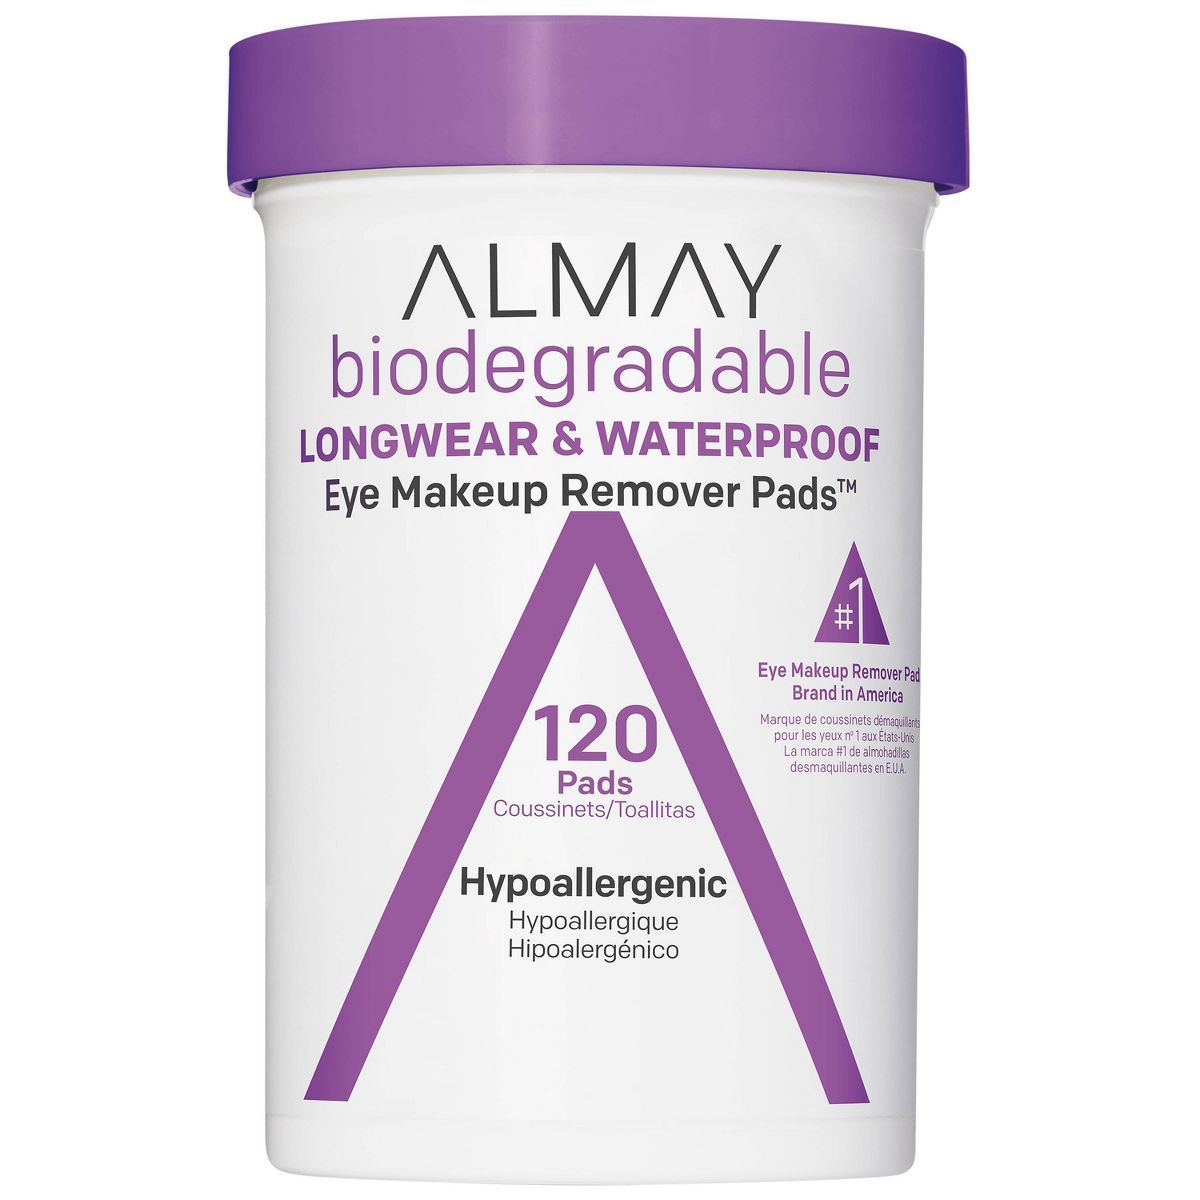 Almay Biodegradable Longwear & Waterproof Eye Makeup Remover Pads | Target